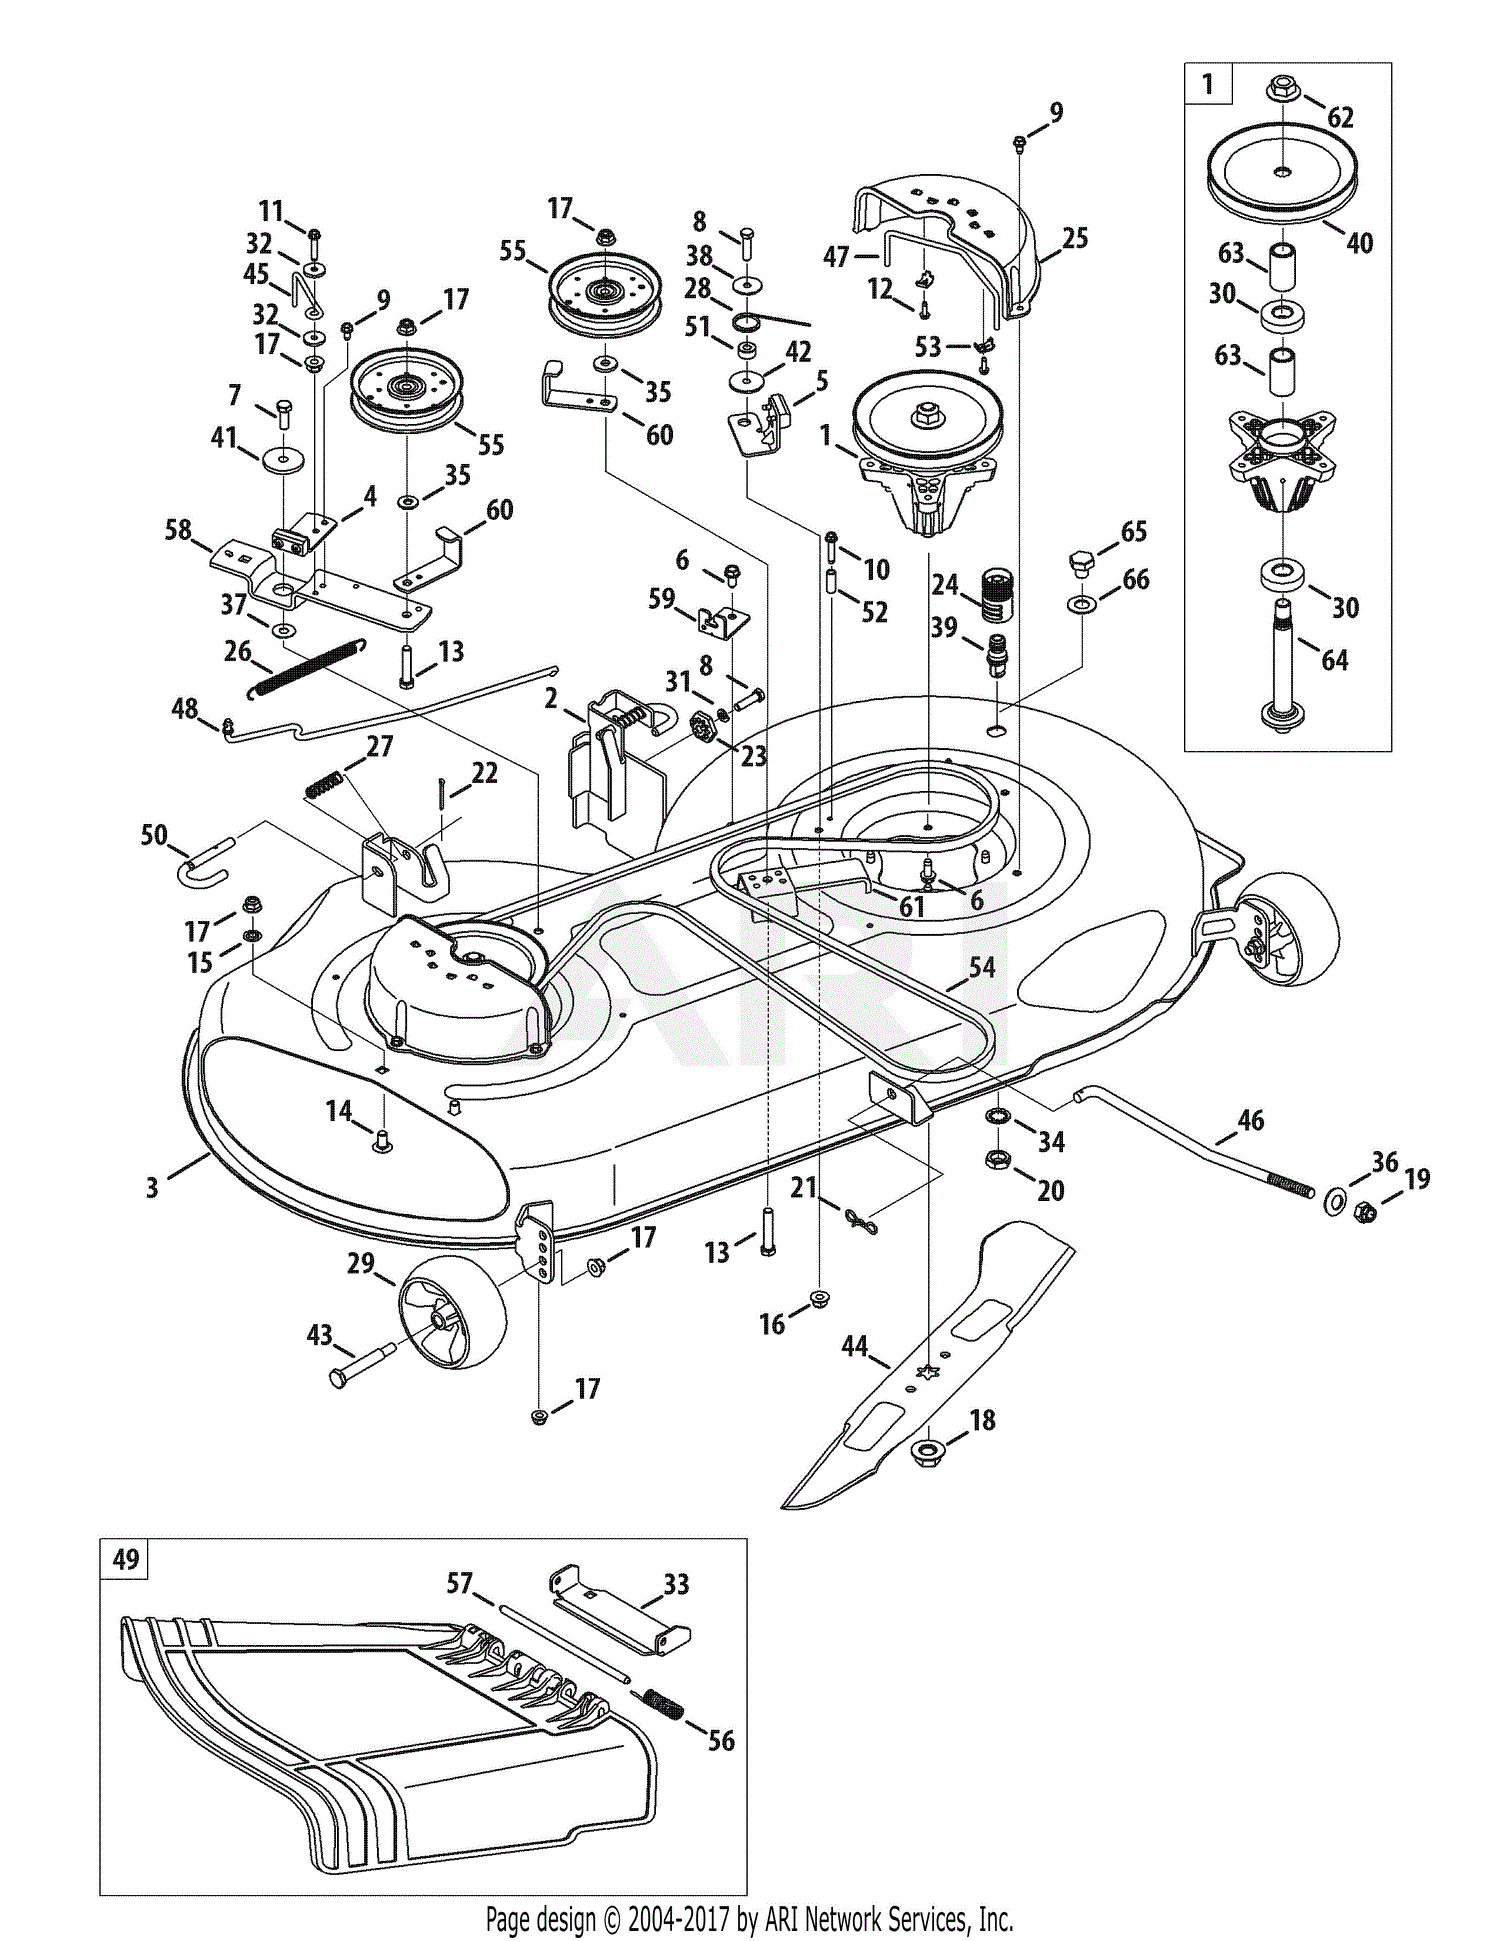 29 Belt Diagram For Troy Bilt Riding Lawn Mower